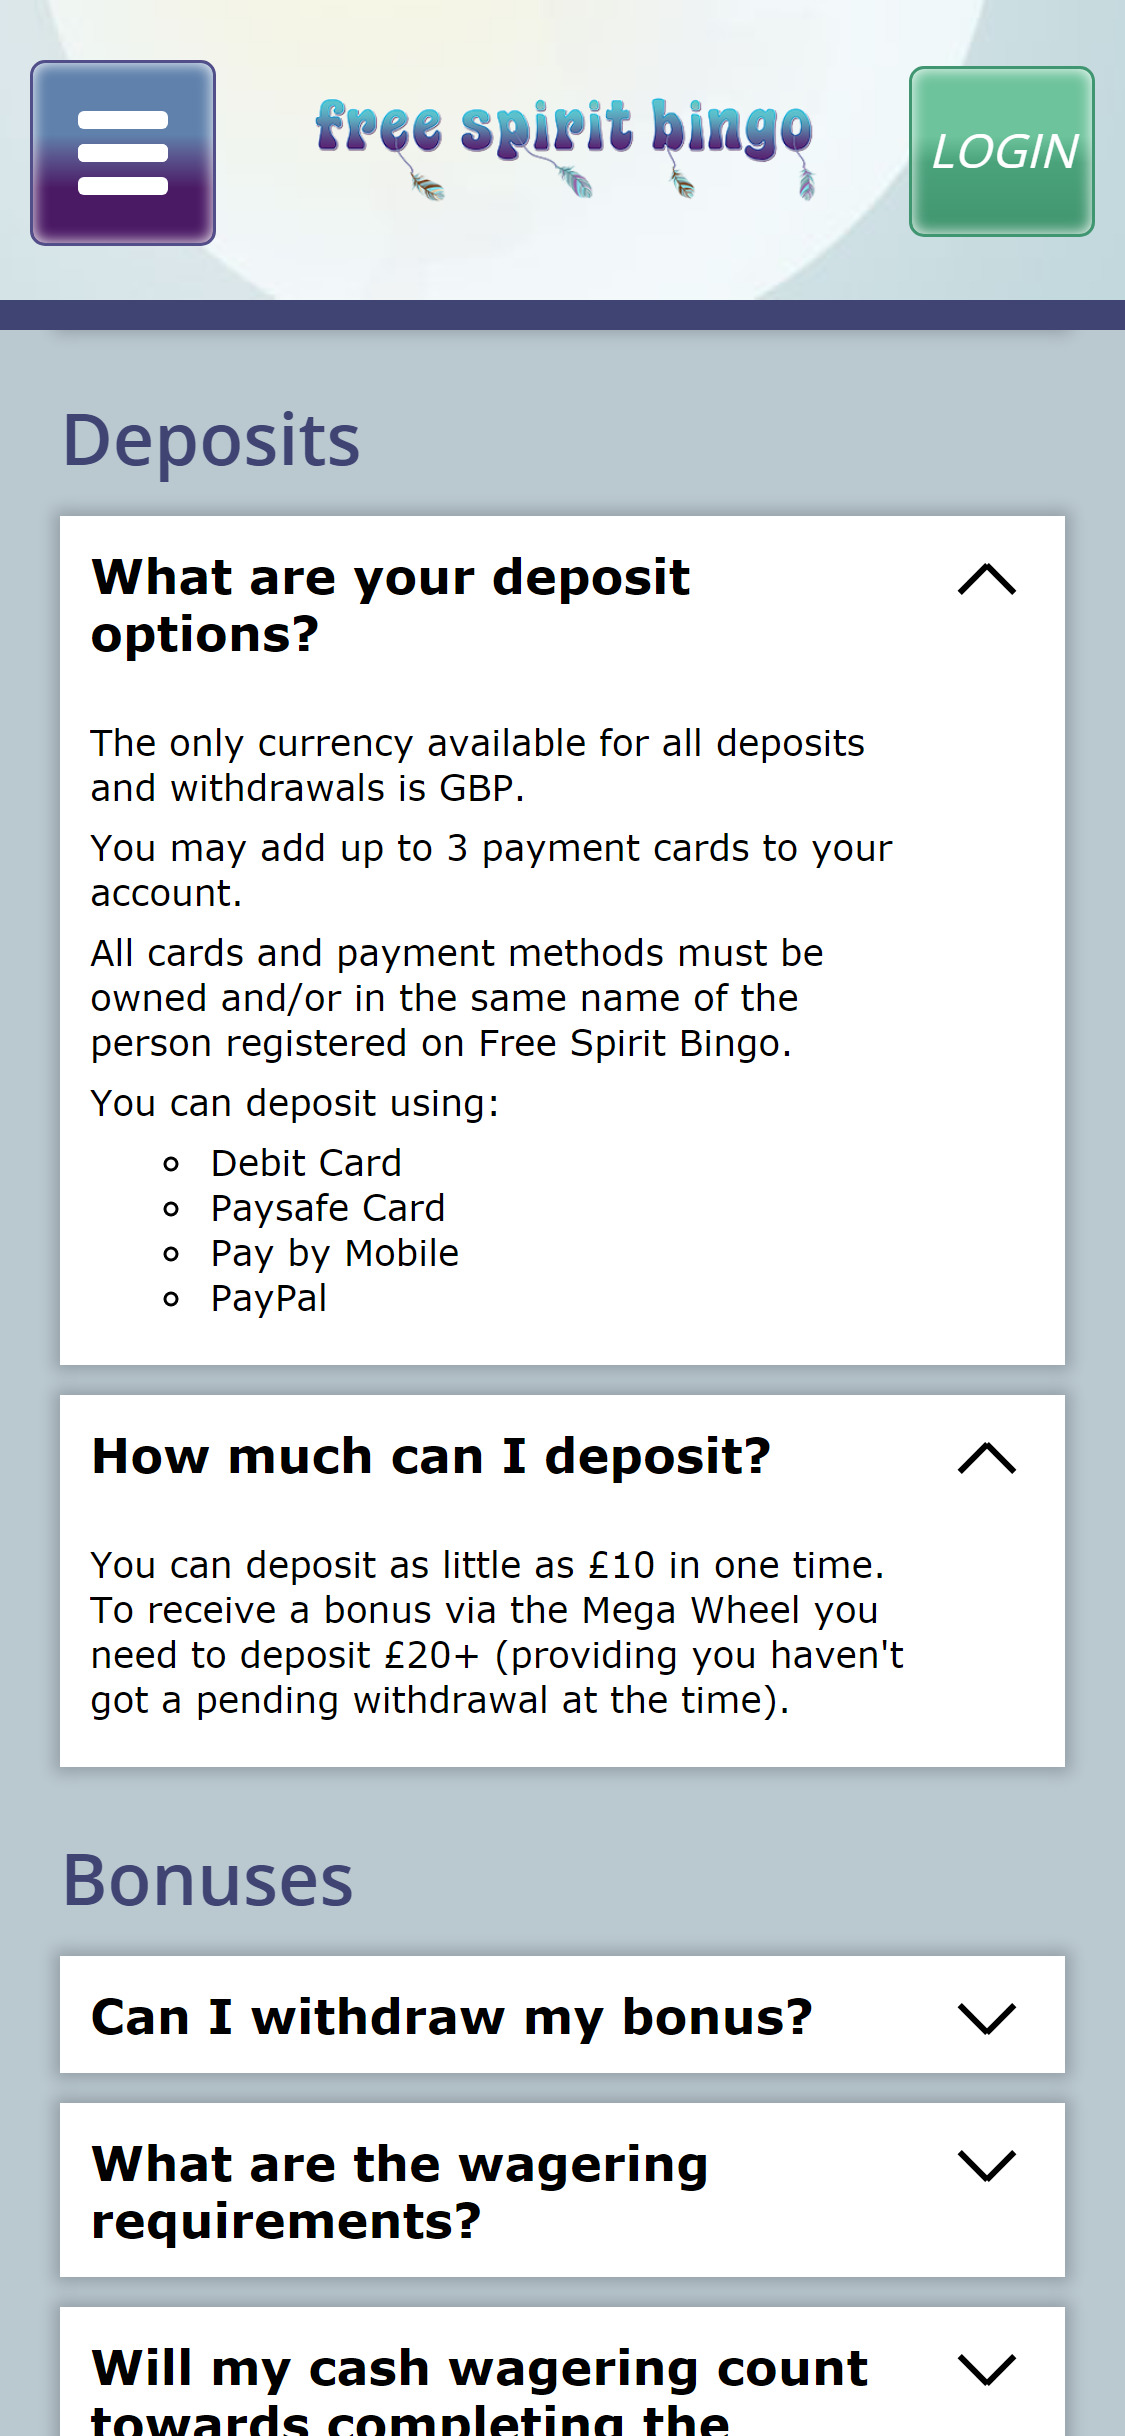 Free Spirit Bingo Casino Mobile Payment Methods Review